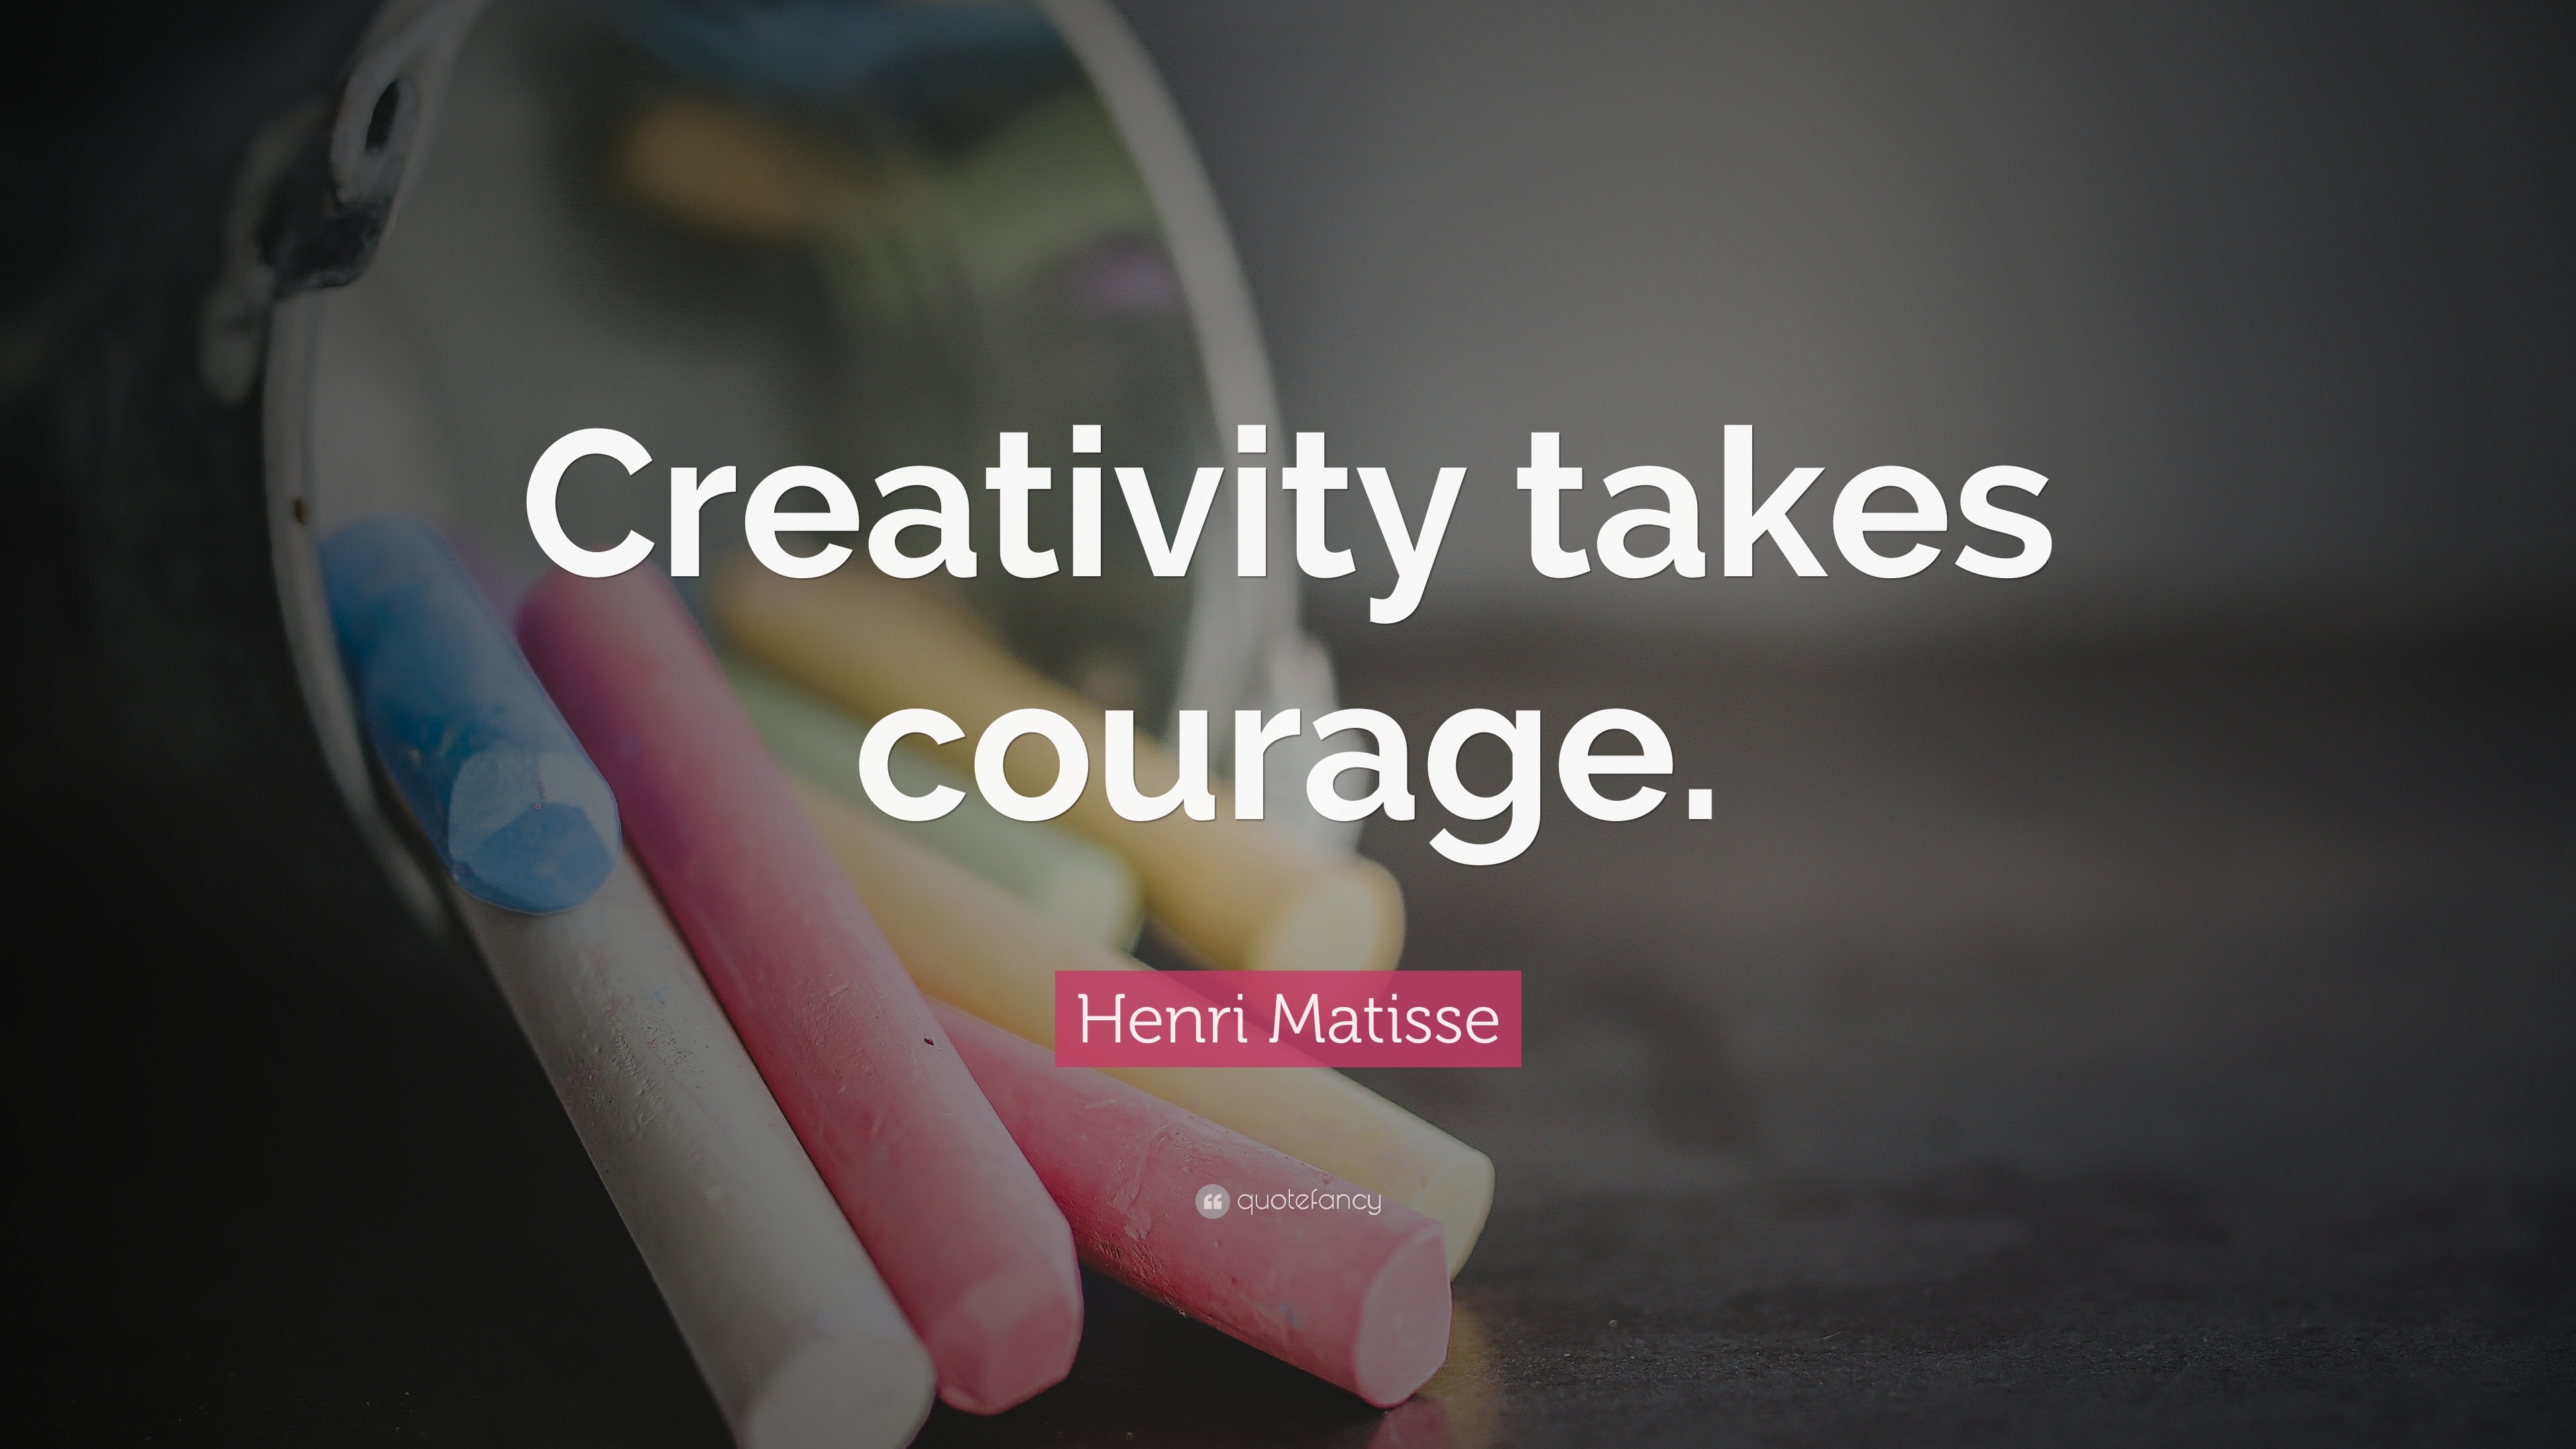 Henri Matisse Quote “creativity Takes Courage